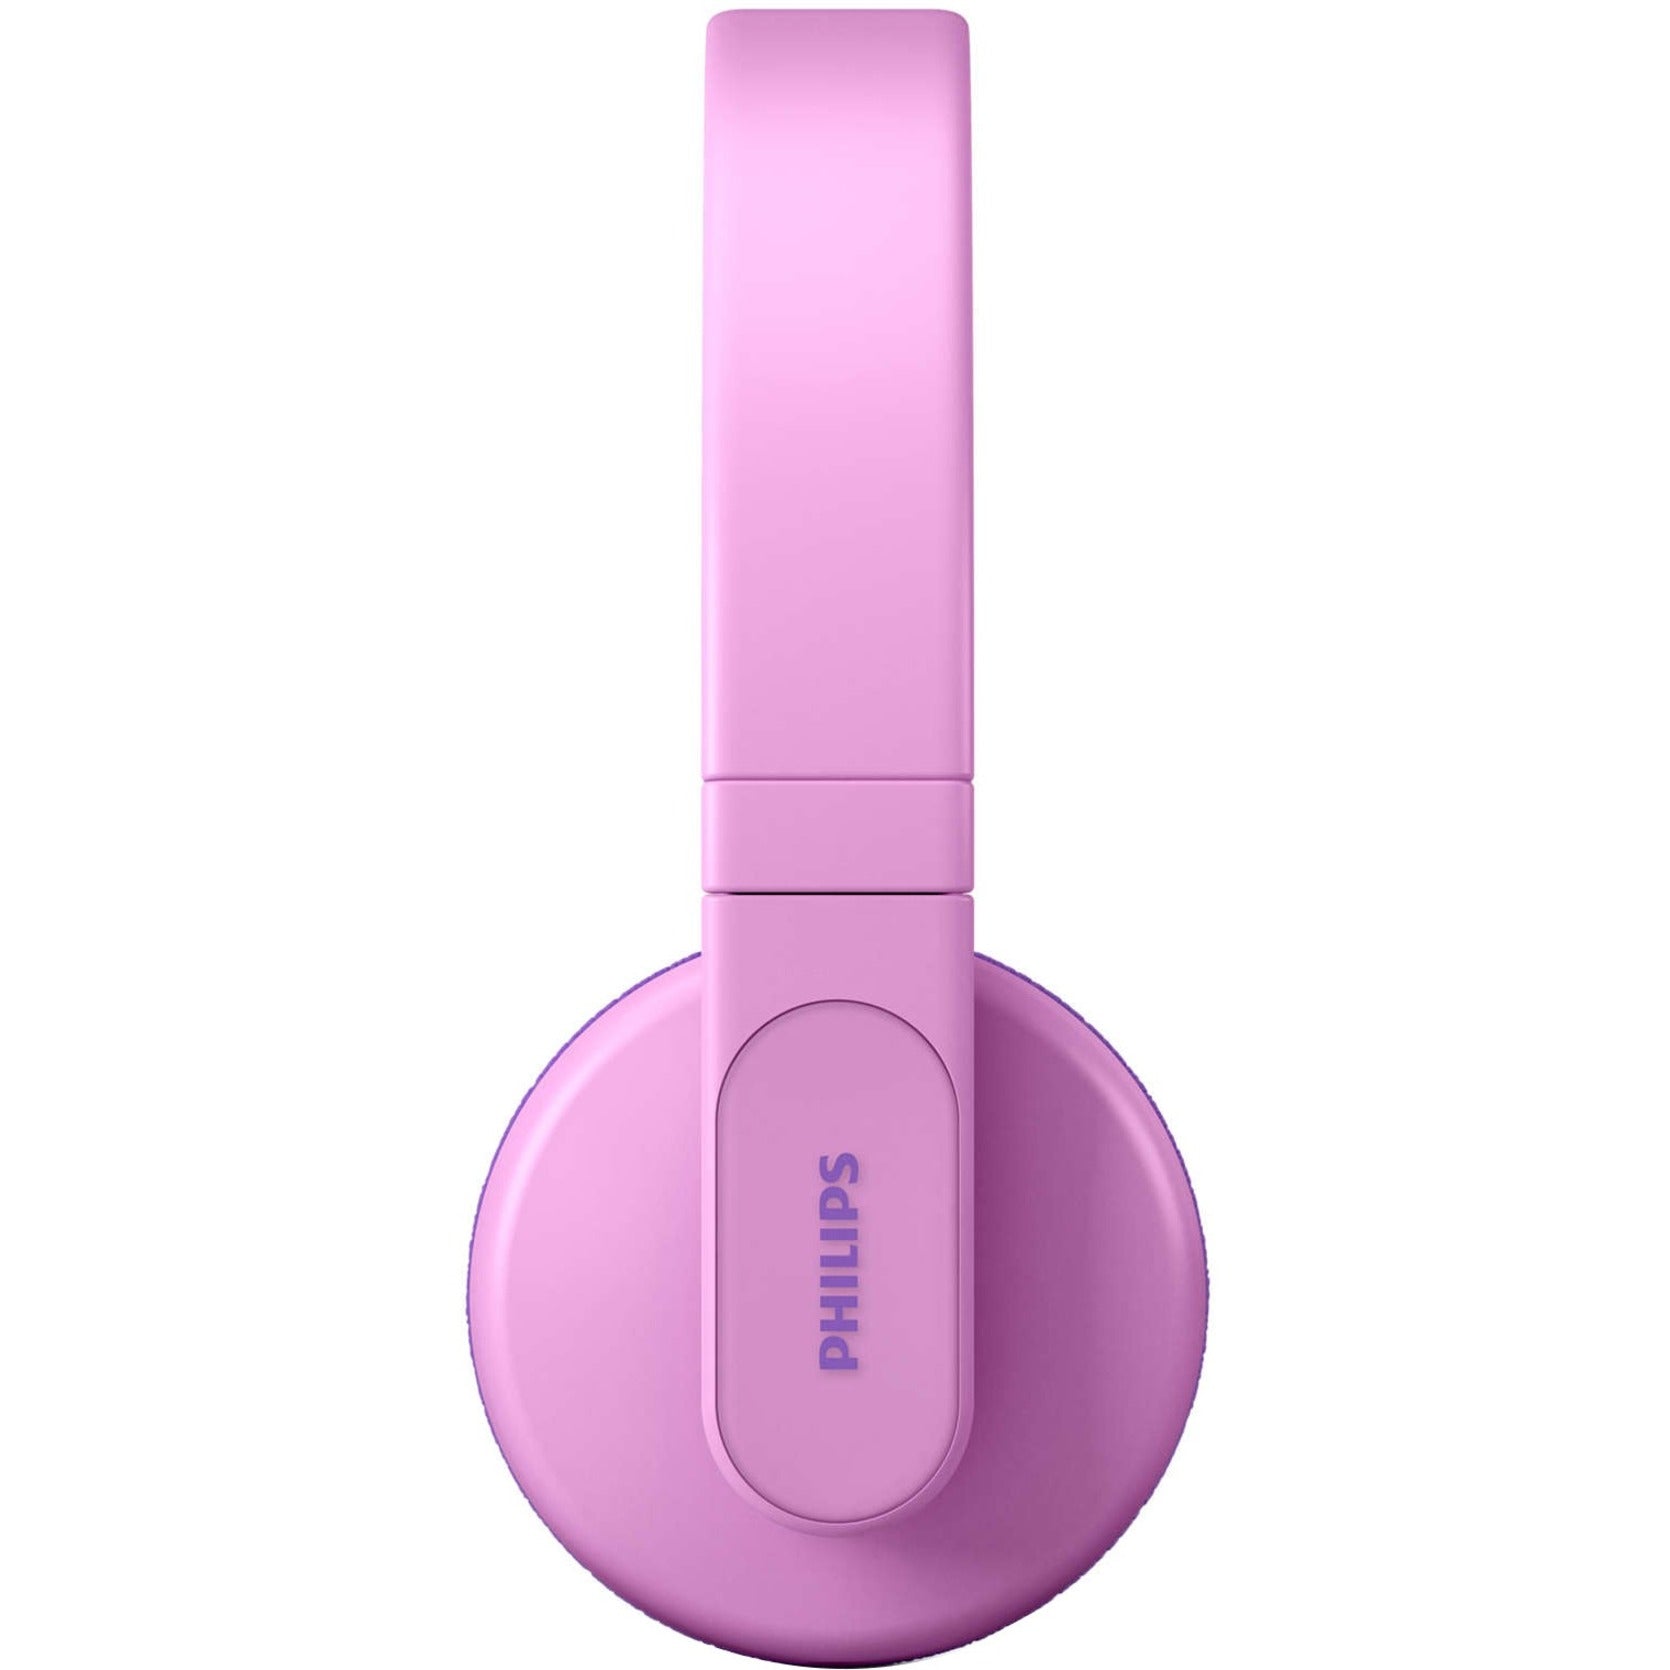 Philips TAK4206PK/00 Headset Binaural On-ear Bluetooth Stereo Pink 28 Hour Battery